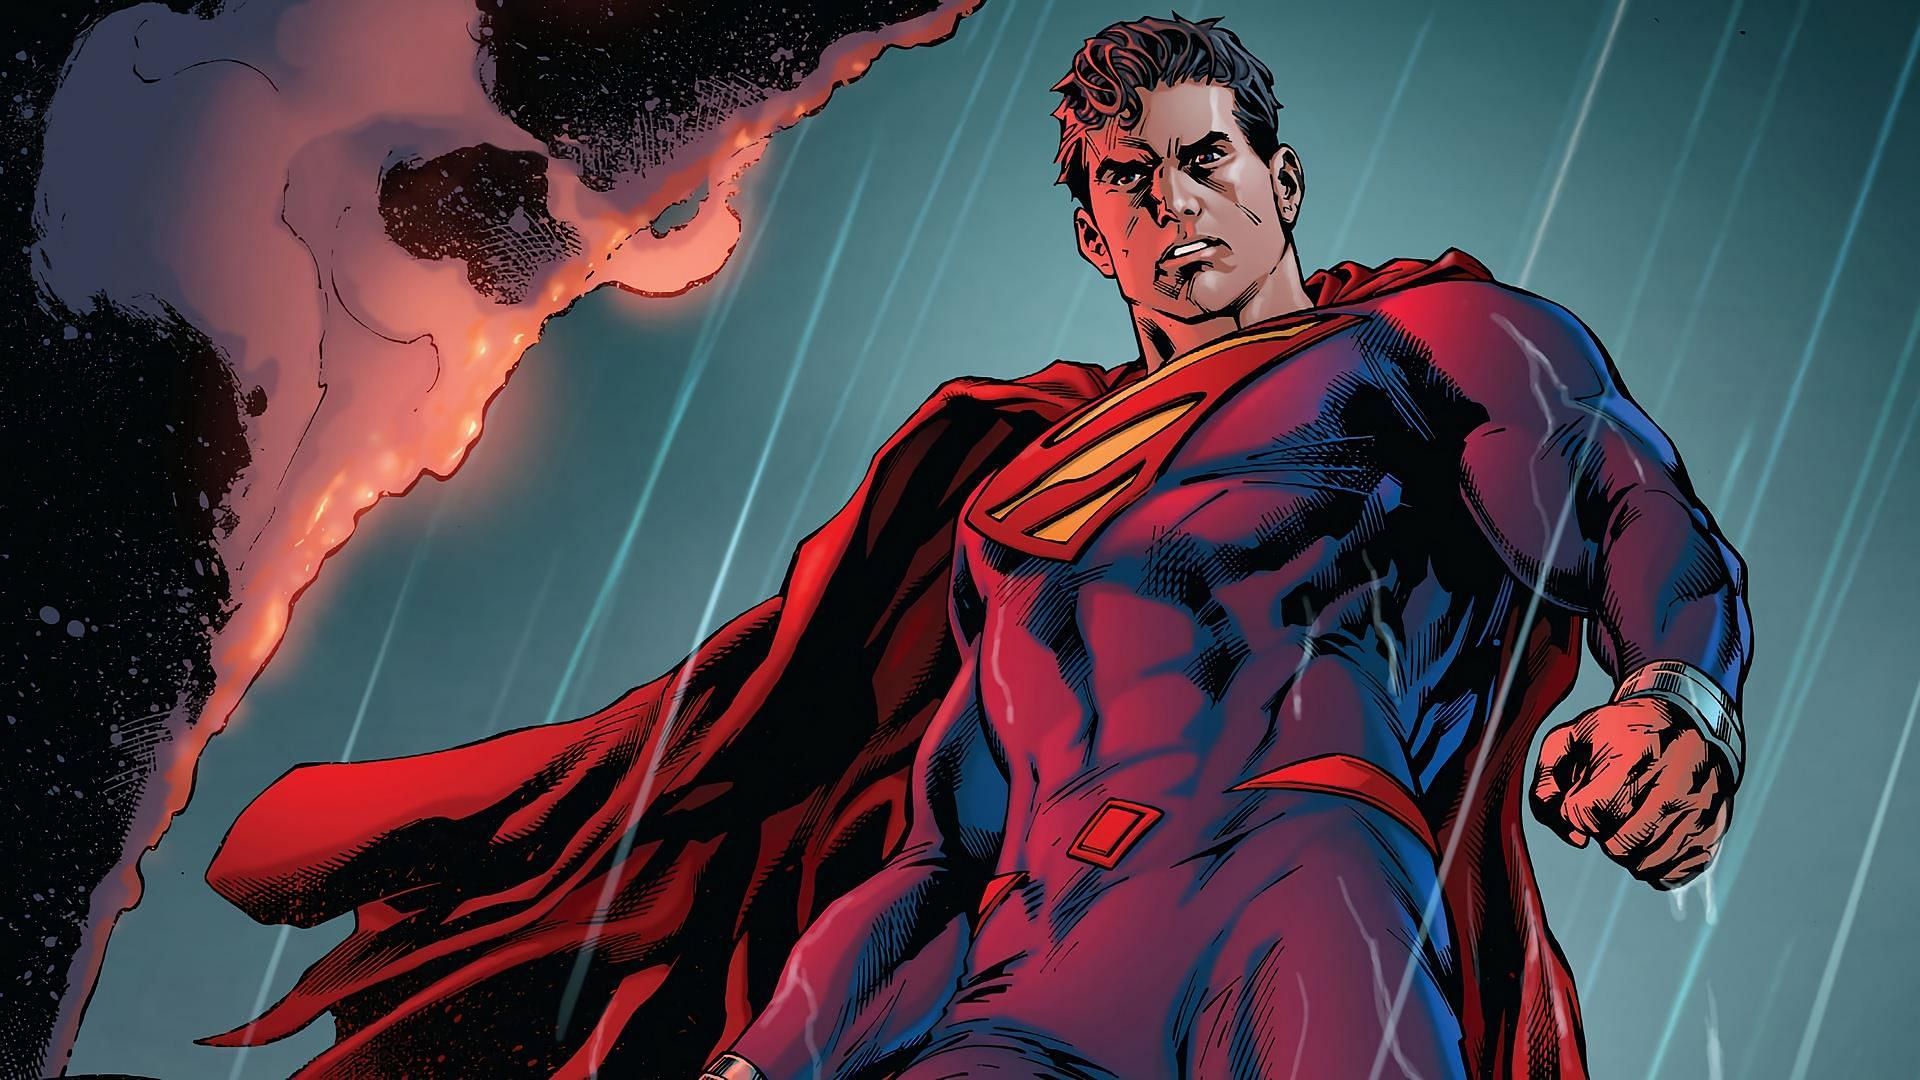 Kal El aka Superman (Image via Jim Lee)